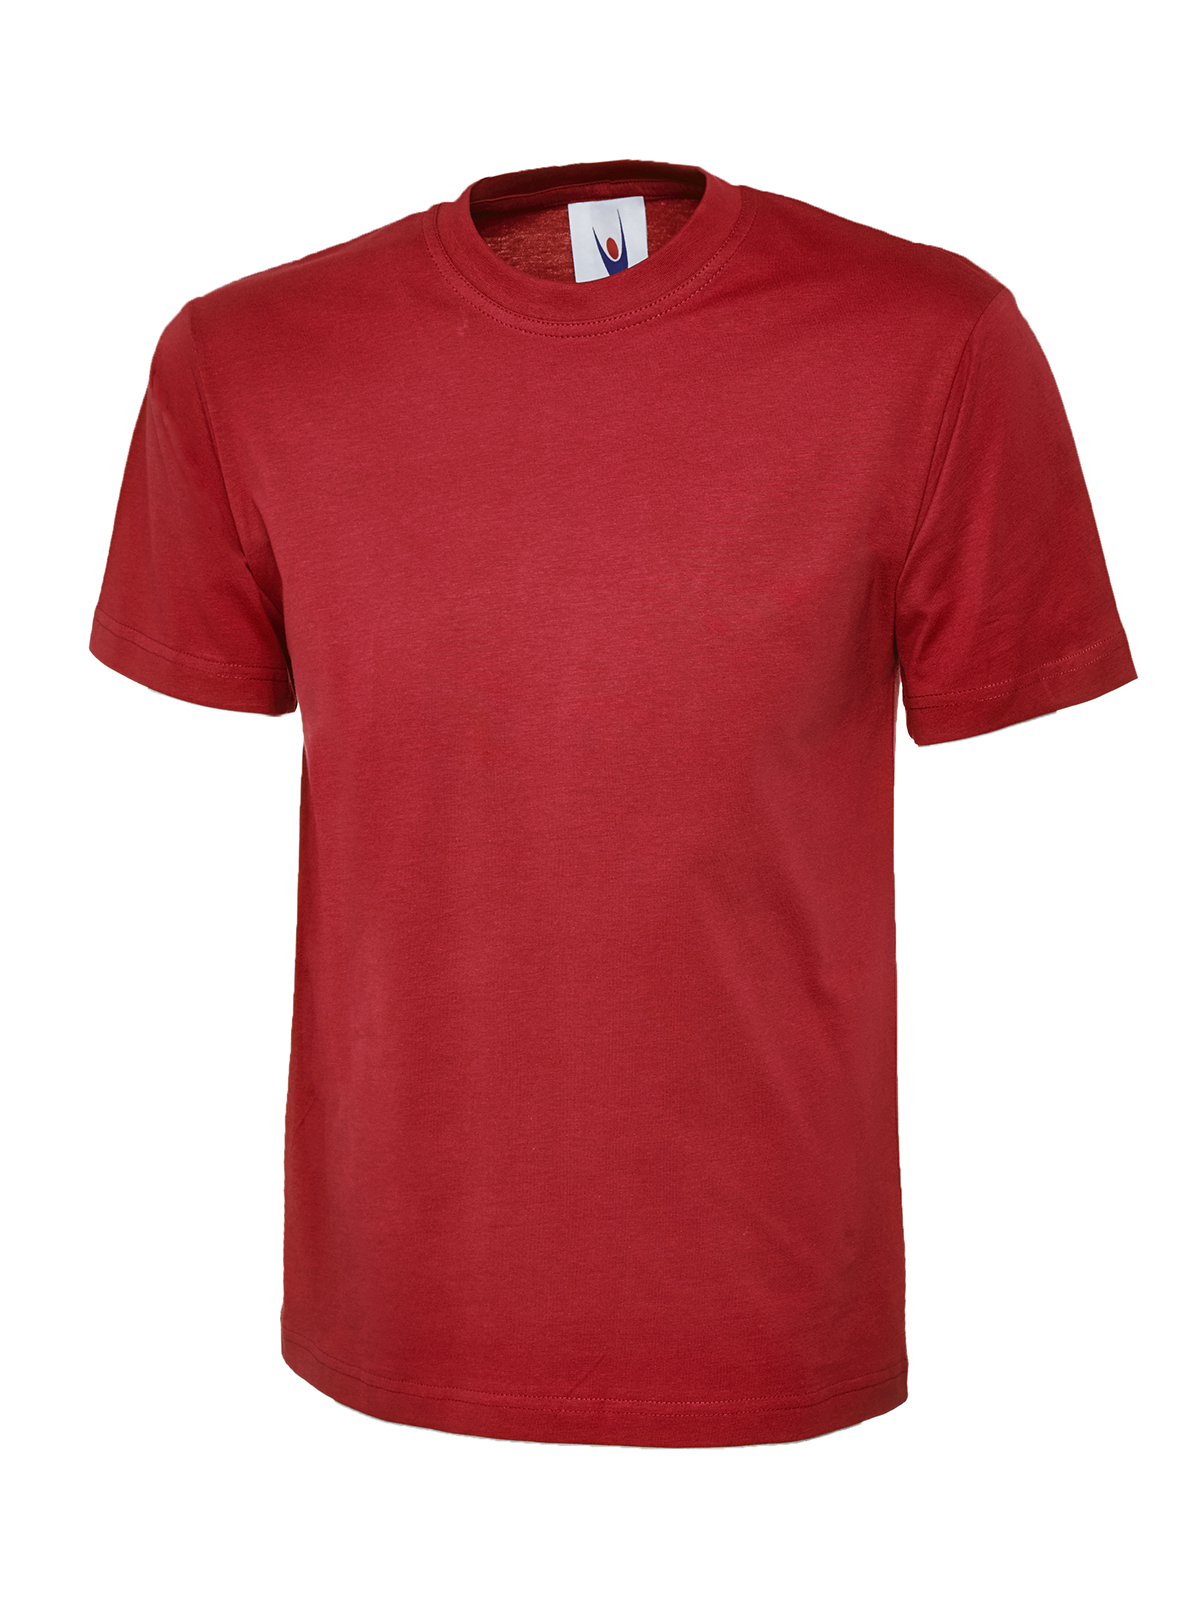 Uneek Herren T-Shirt Premium rot